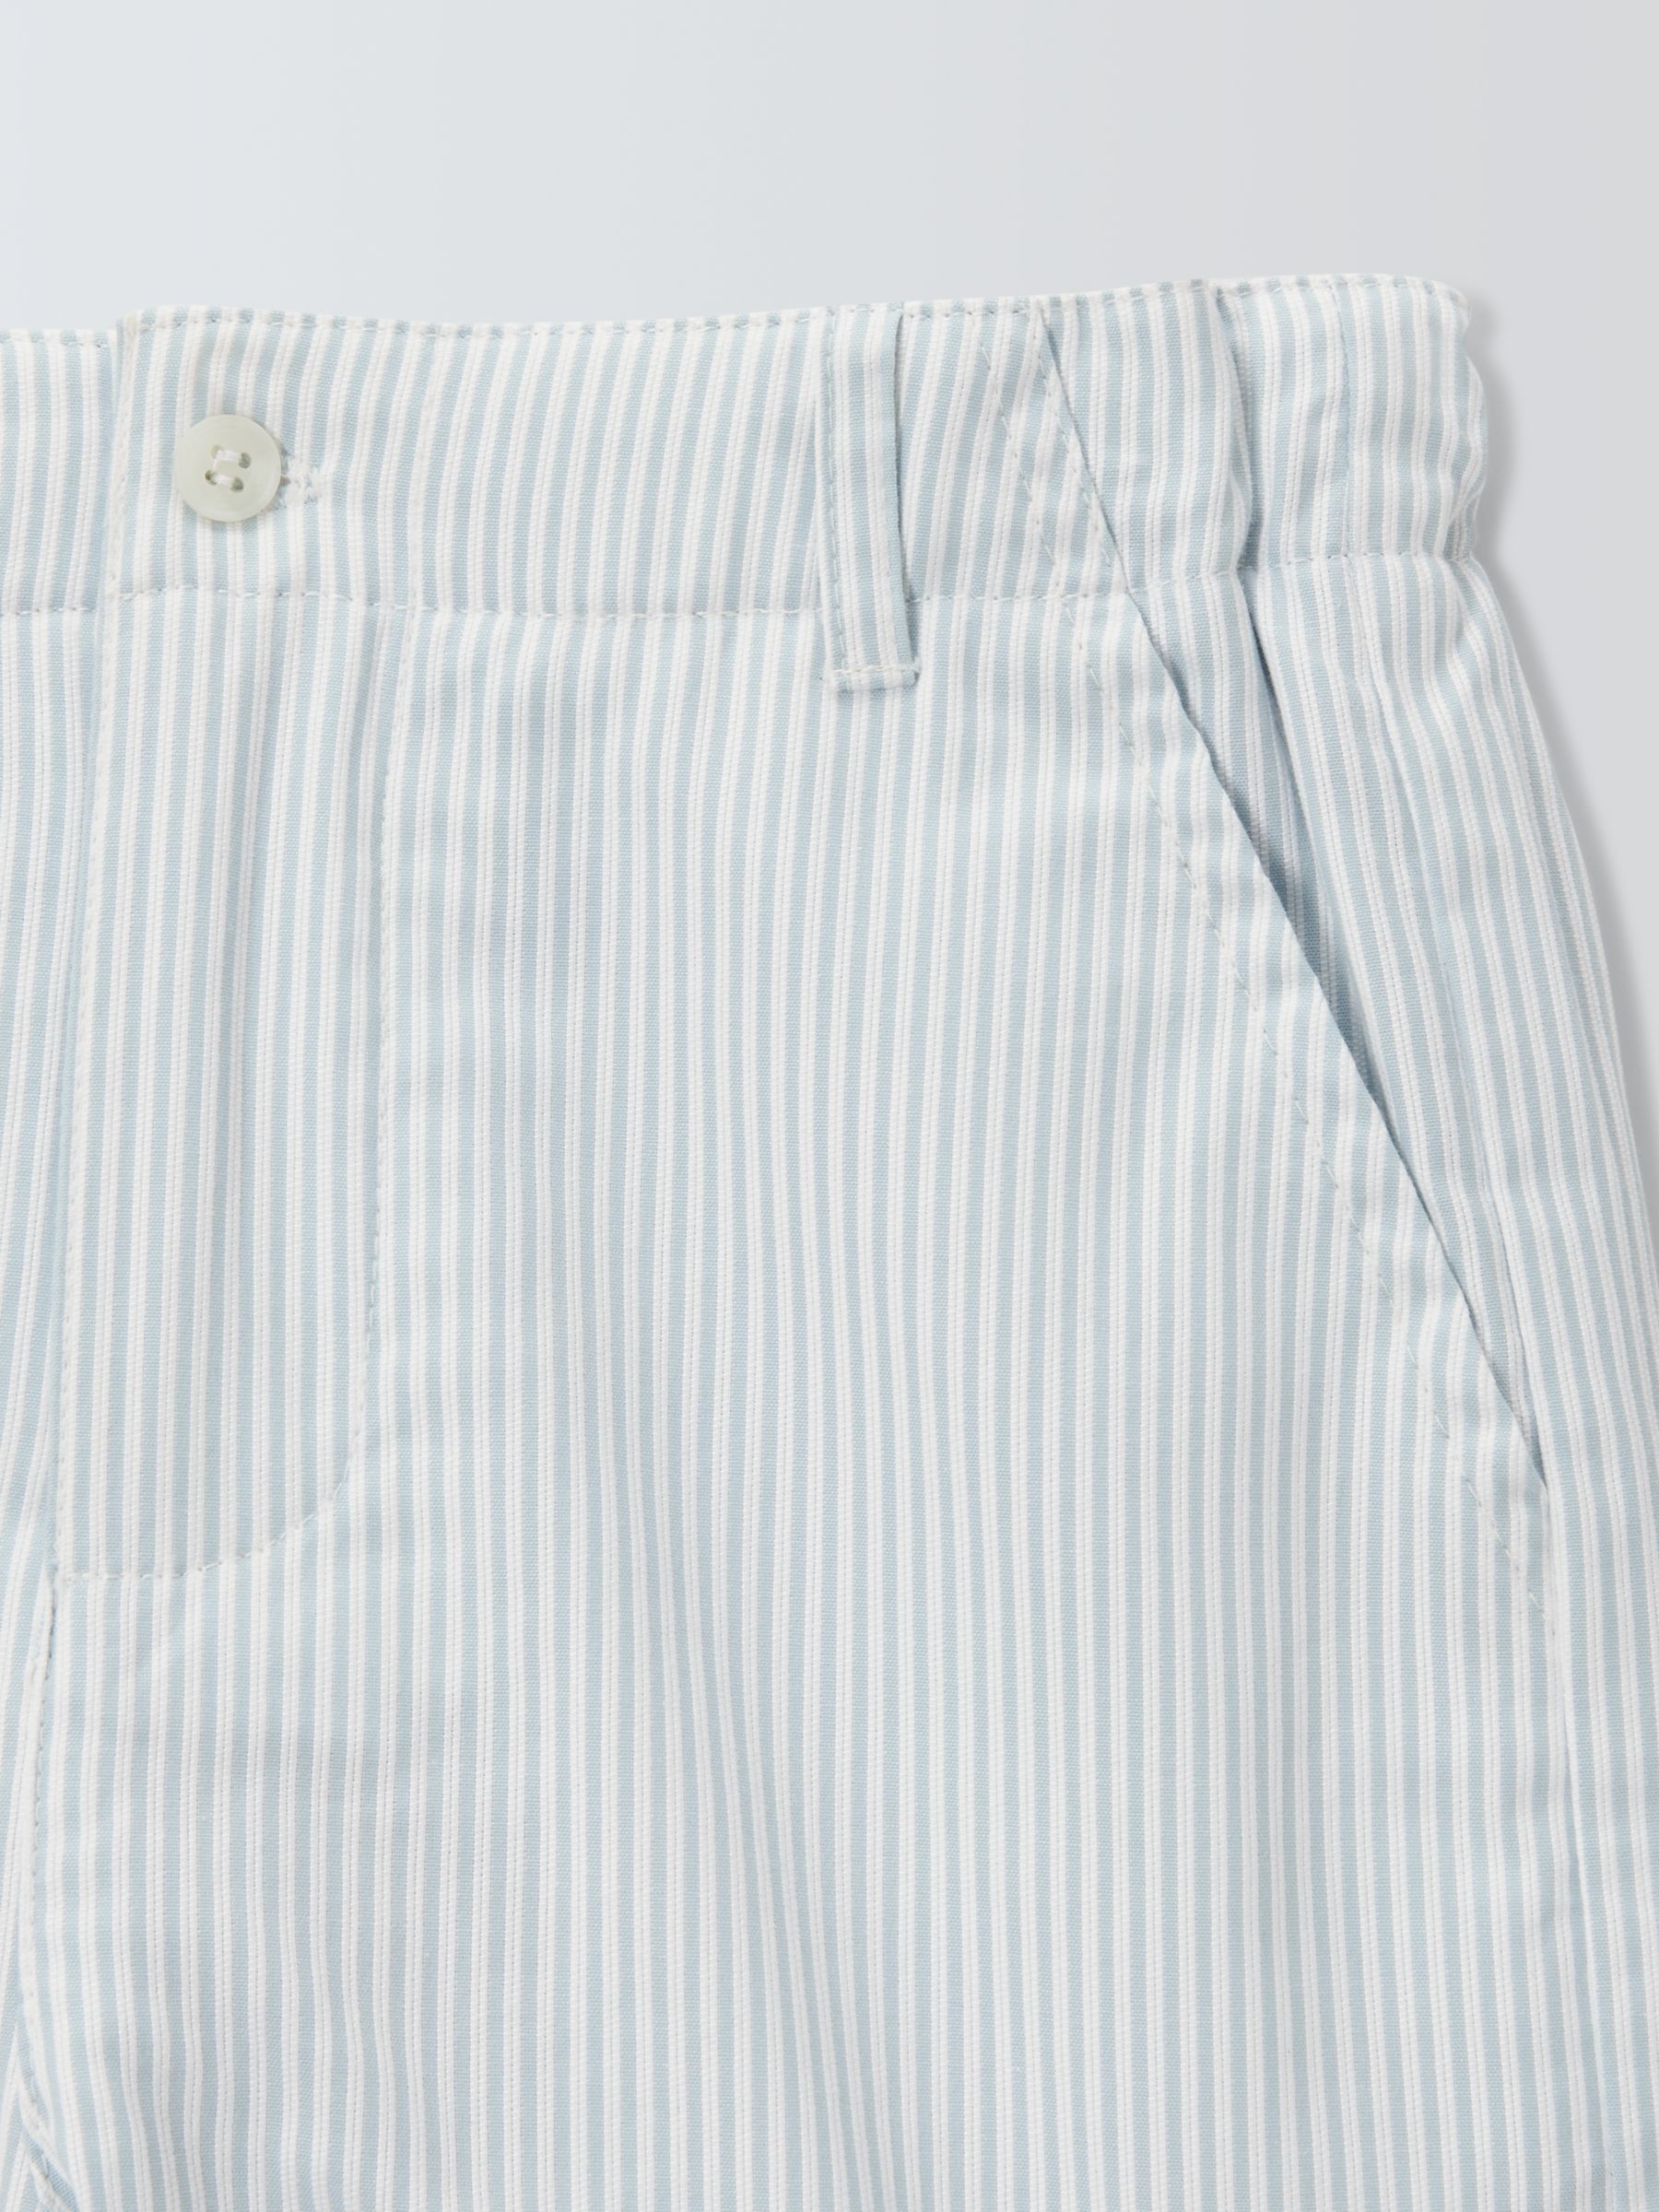 John Lewis Heirloom Collection Kids' Ticking Stripe Shorts, Blue/White, 9 years